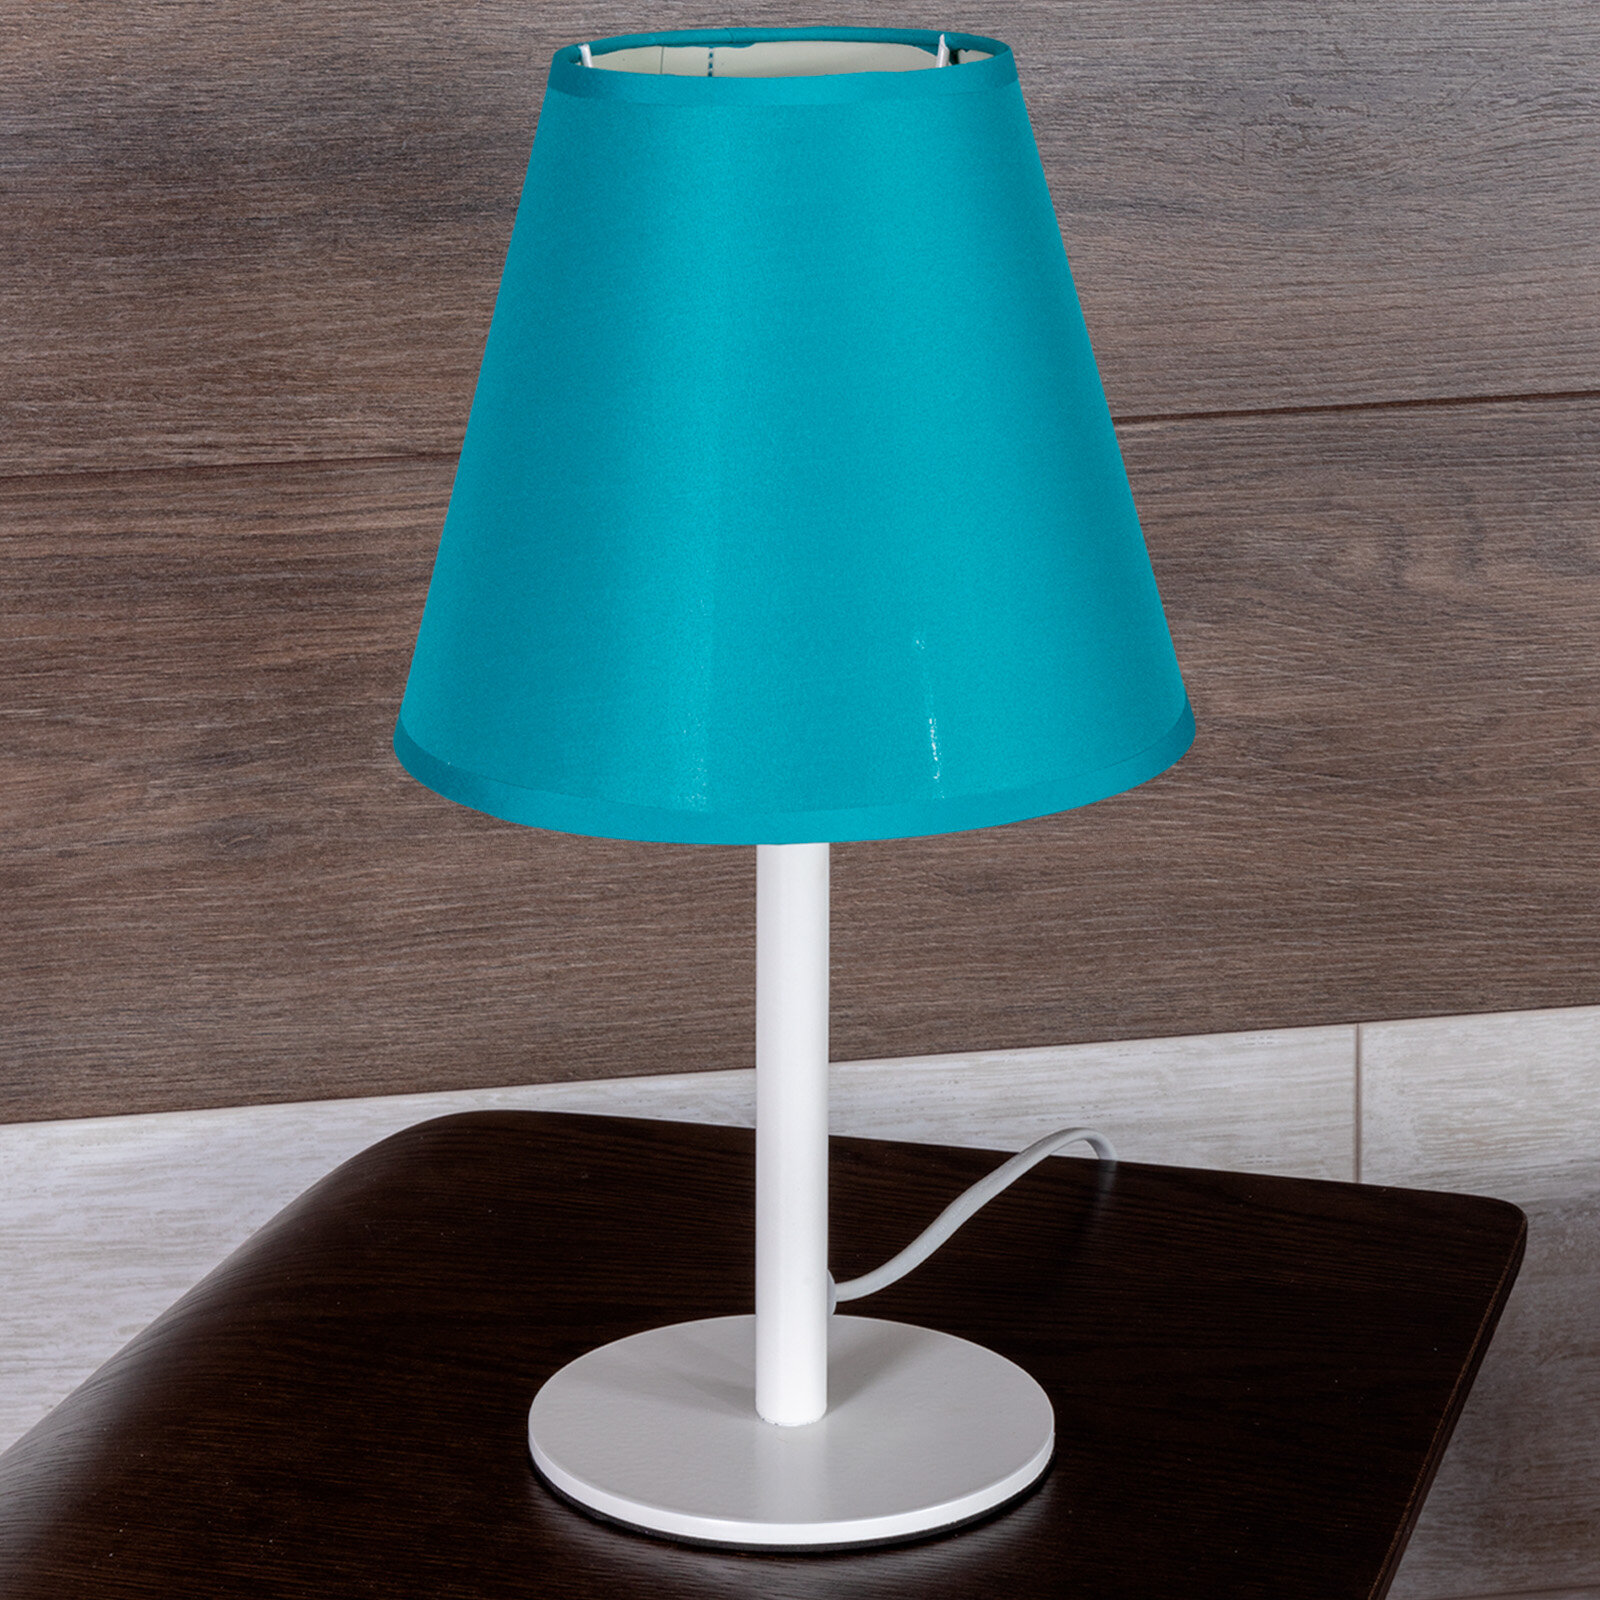 Настольная лампа светильник настольный с абажуром арт. MA-40427-W+T Цвет белый абажур бирюзовый.